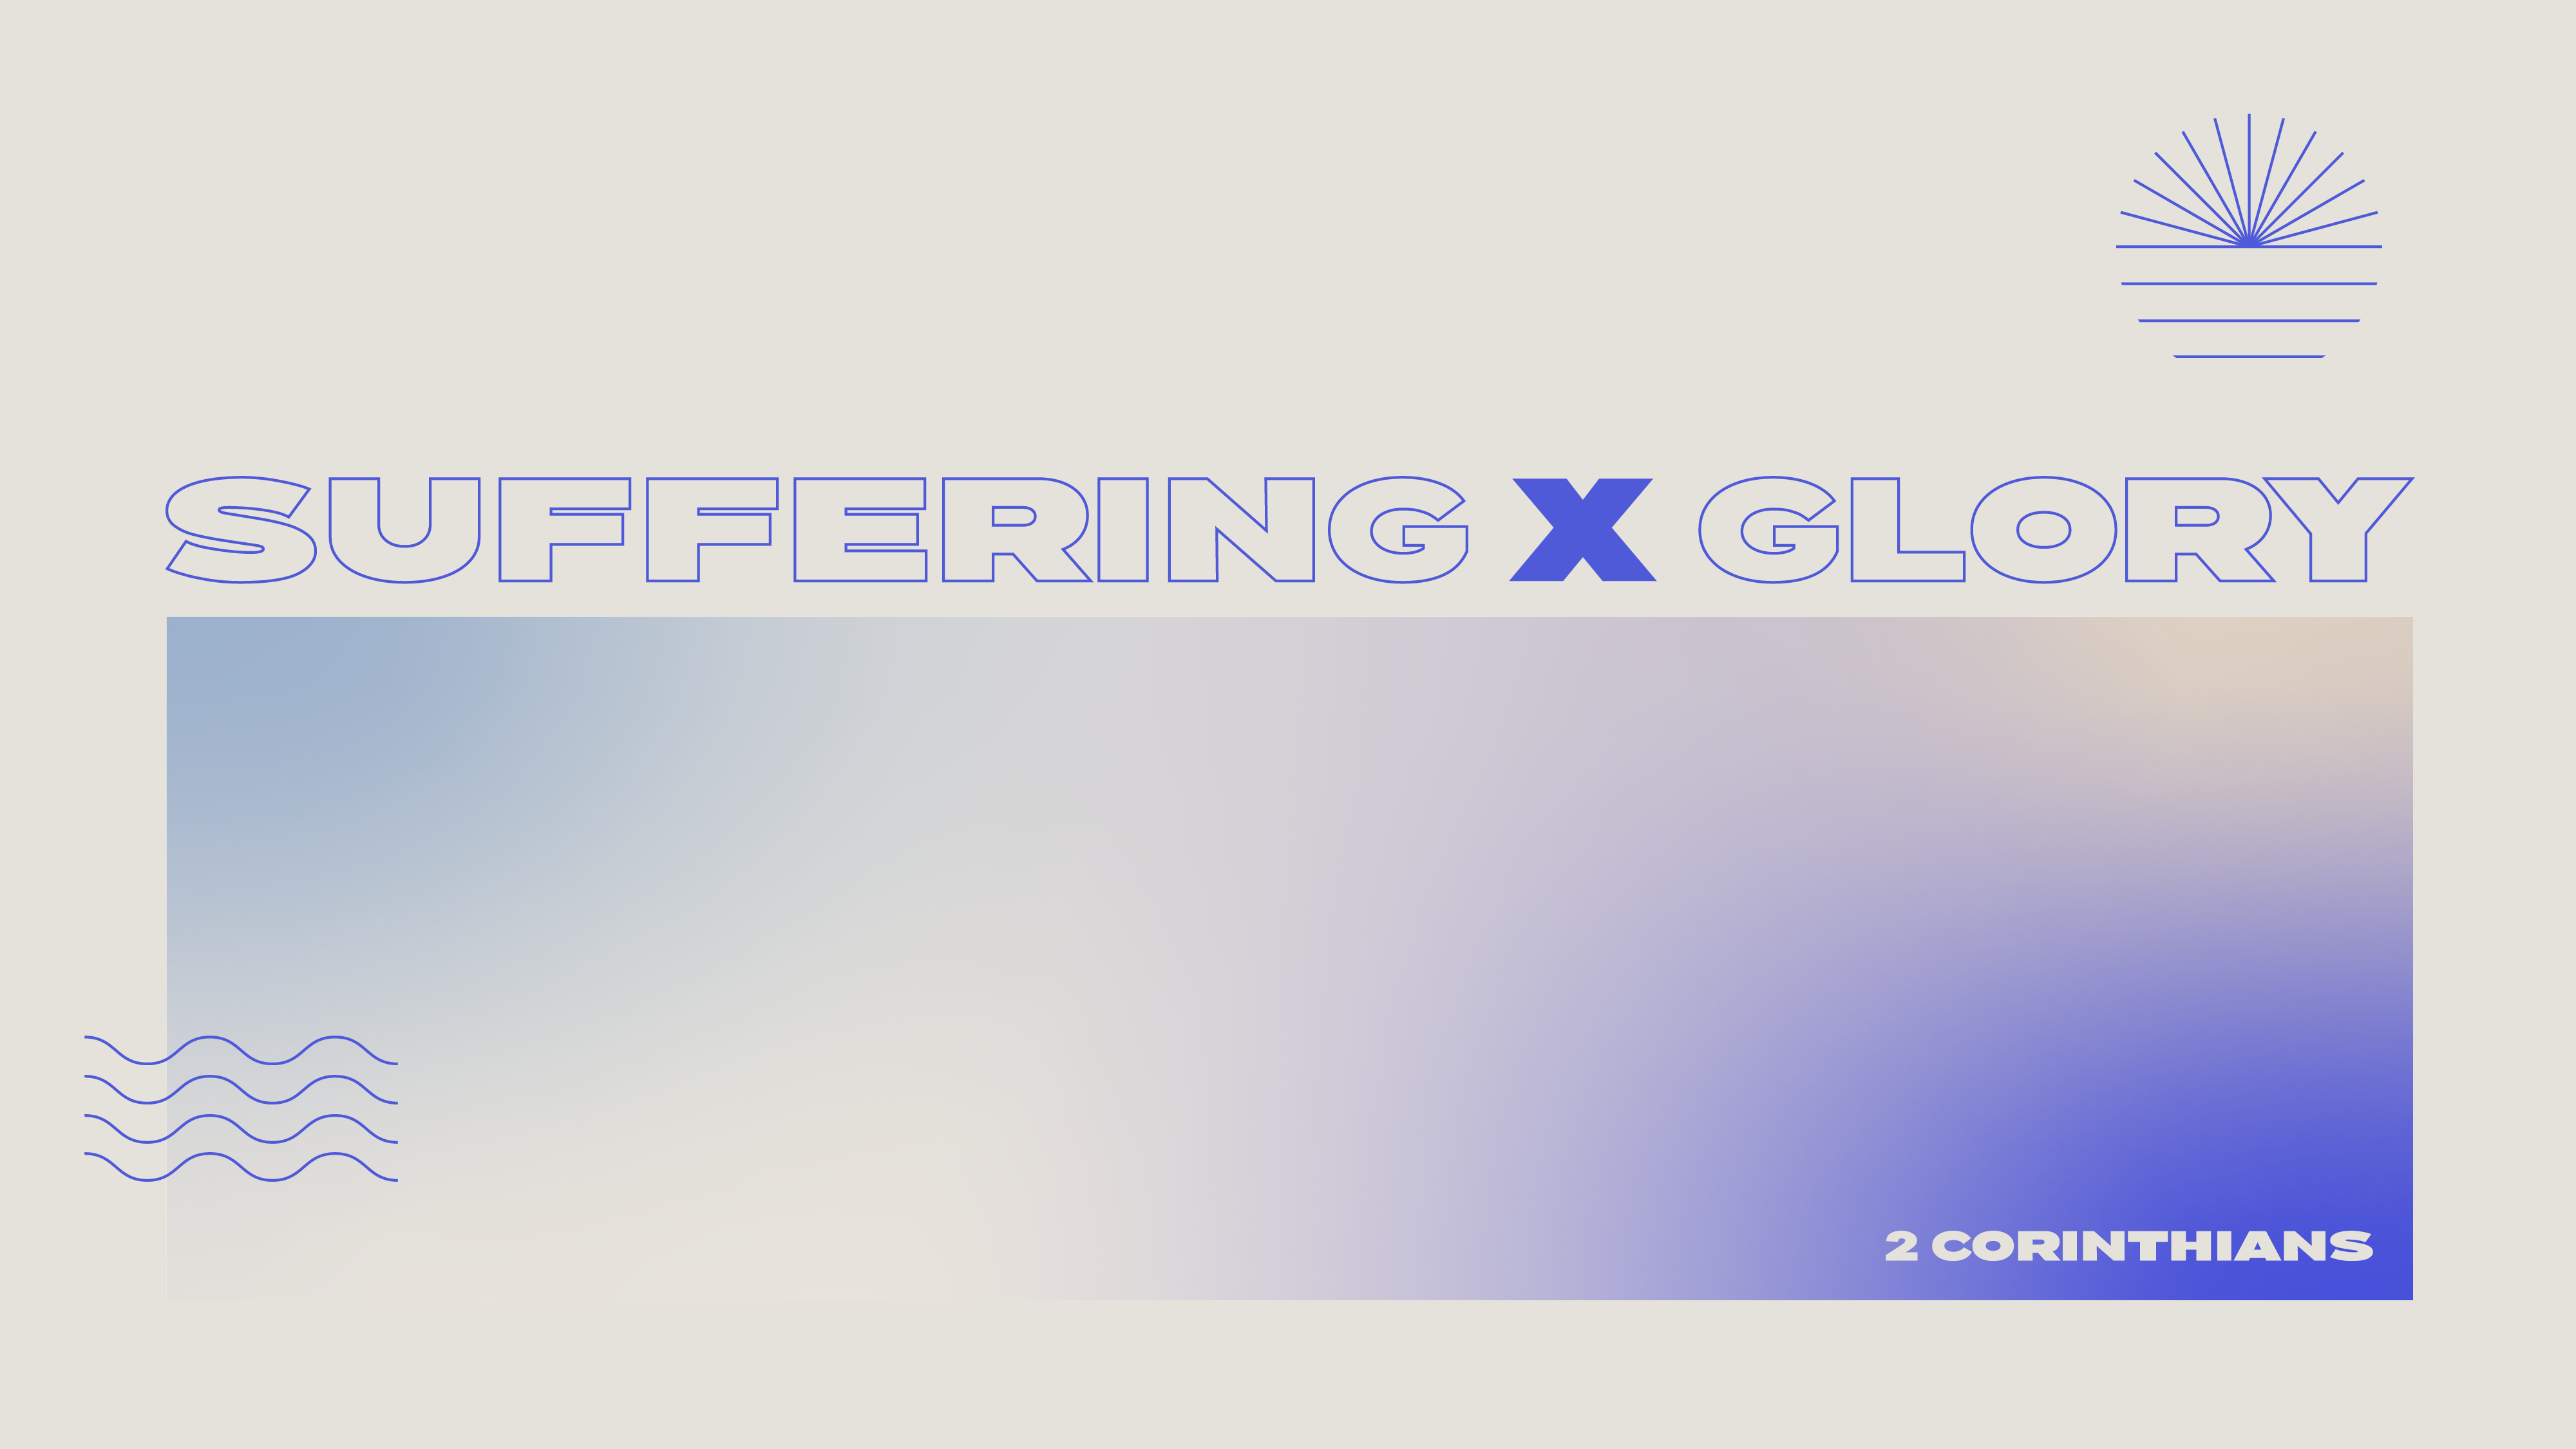 SufferingXGlory | Forgotten Generosity